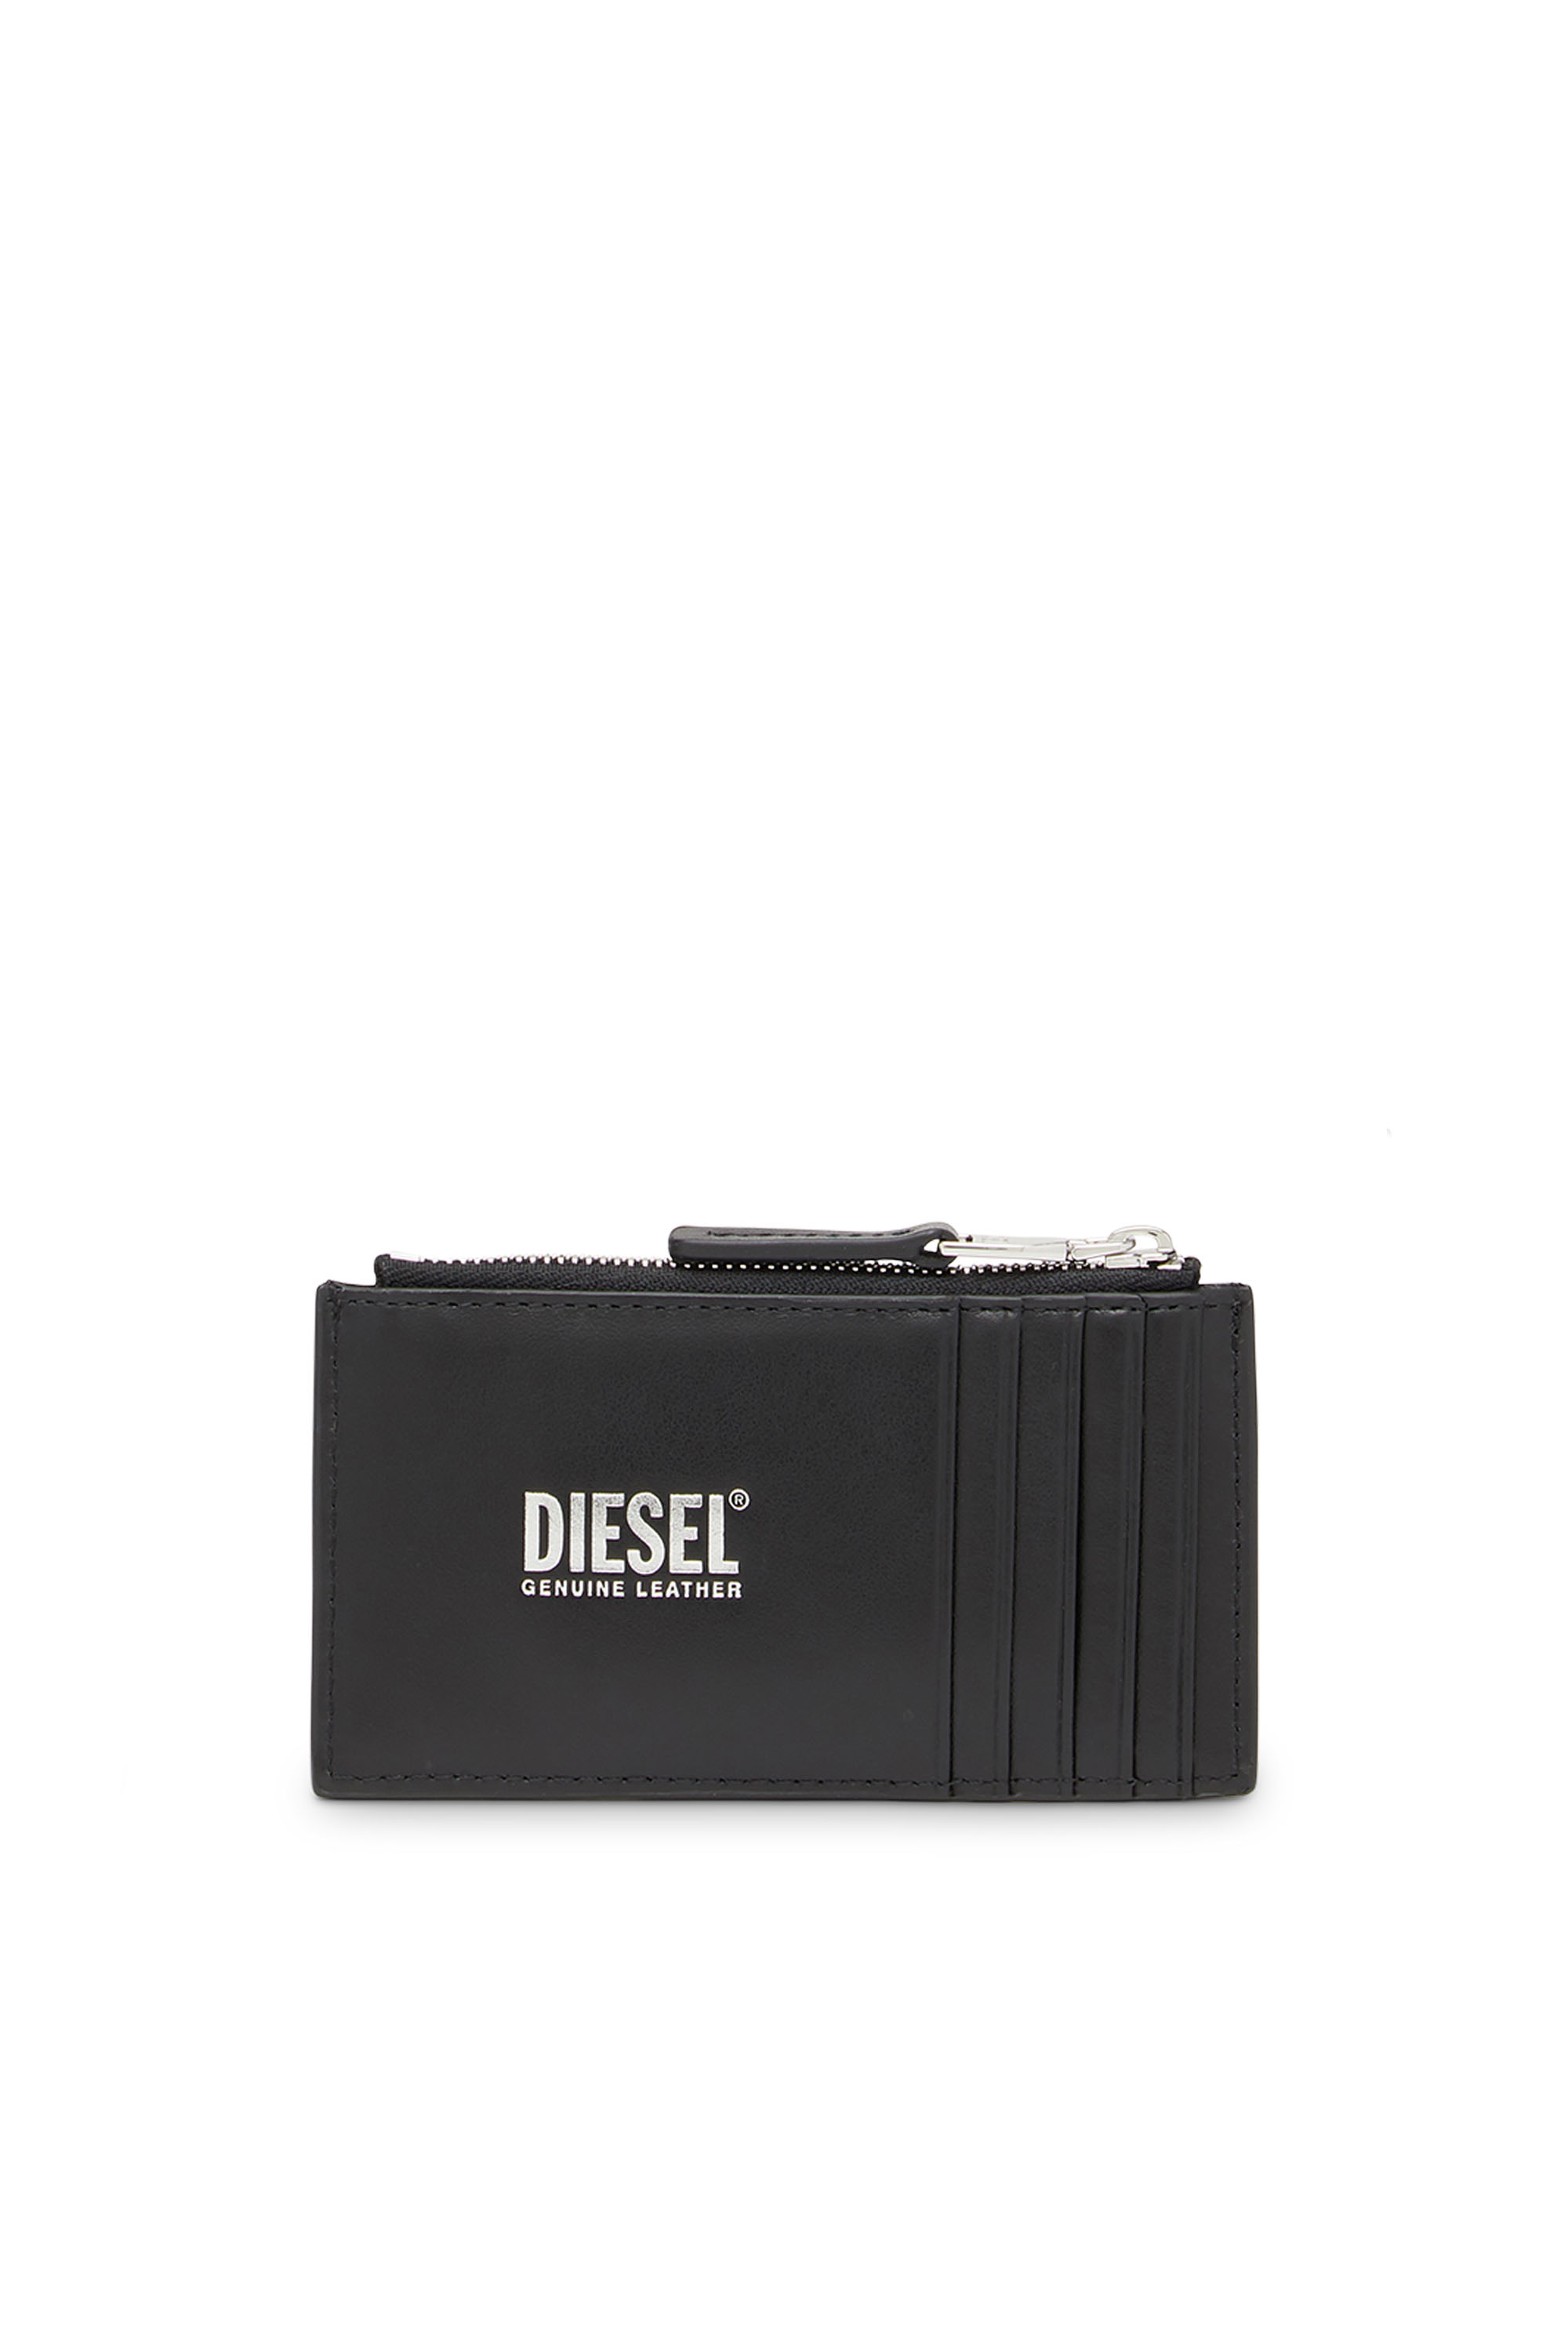 Diesel - PAOULINA, Black - Image 2